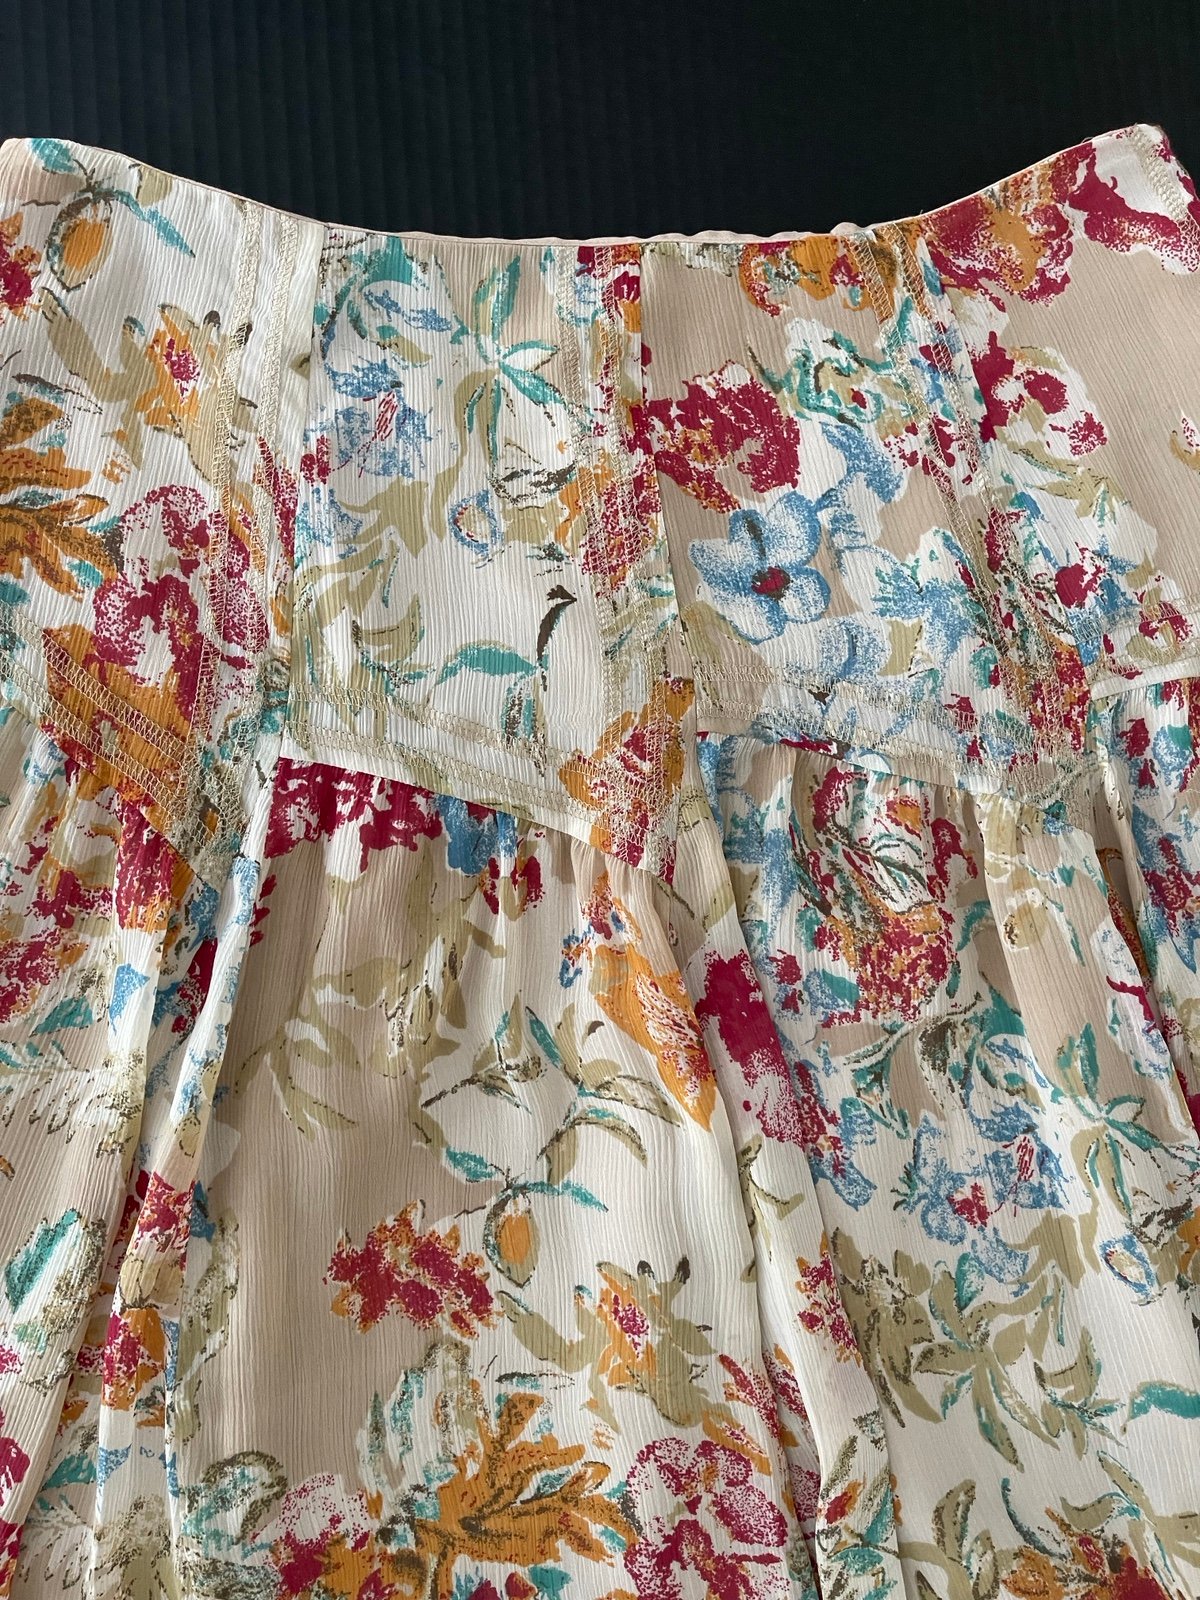 Amazing Nine West Floral Skirt Sz 8 nYx5a8hmq Low Price